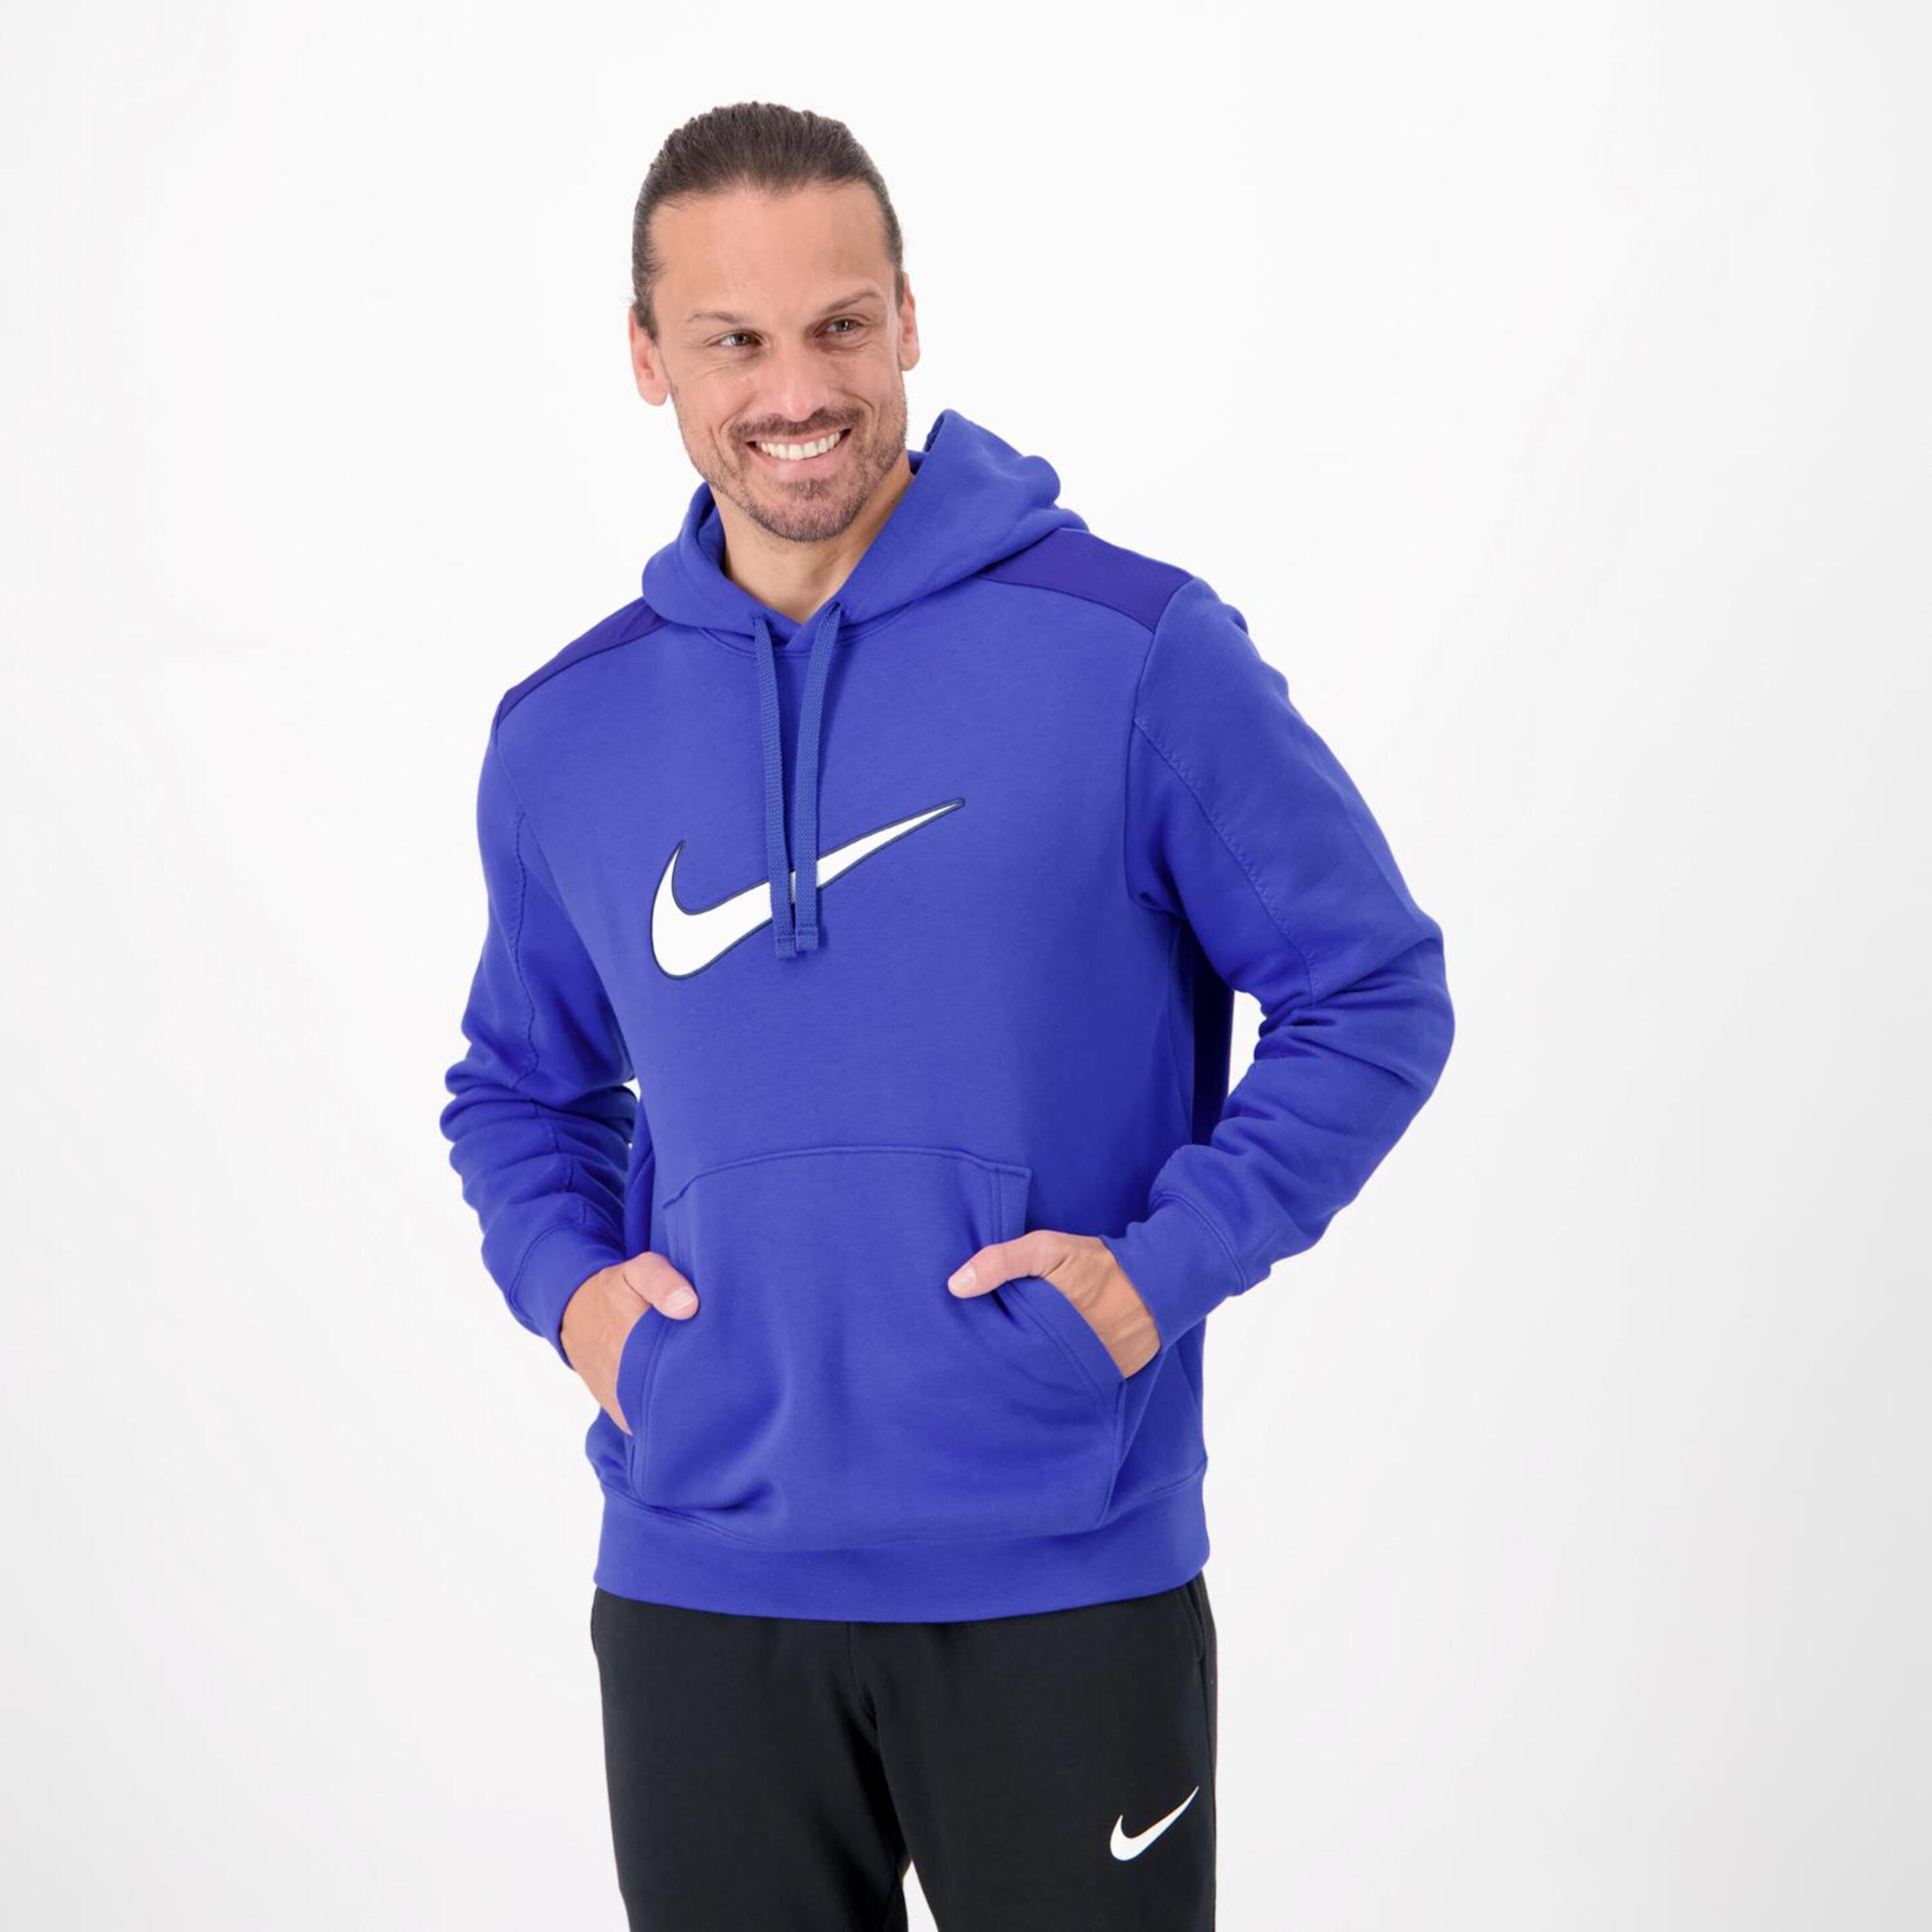 Nike Sport - azul - Sudadera Capucha Hombre